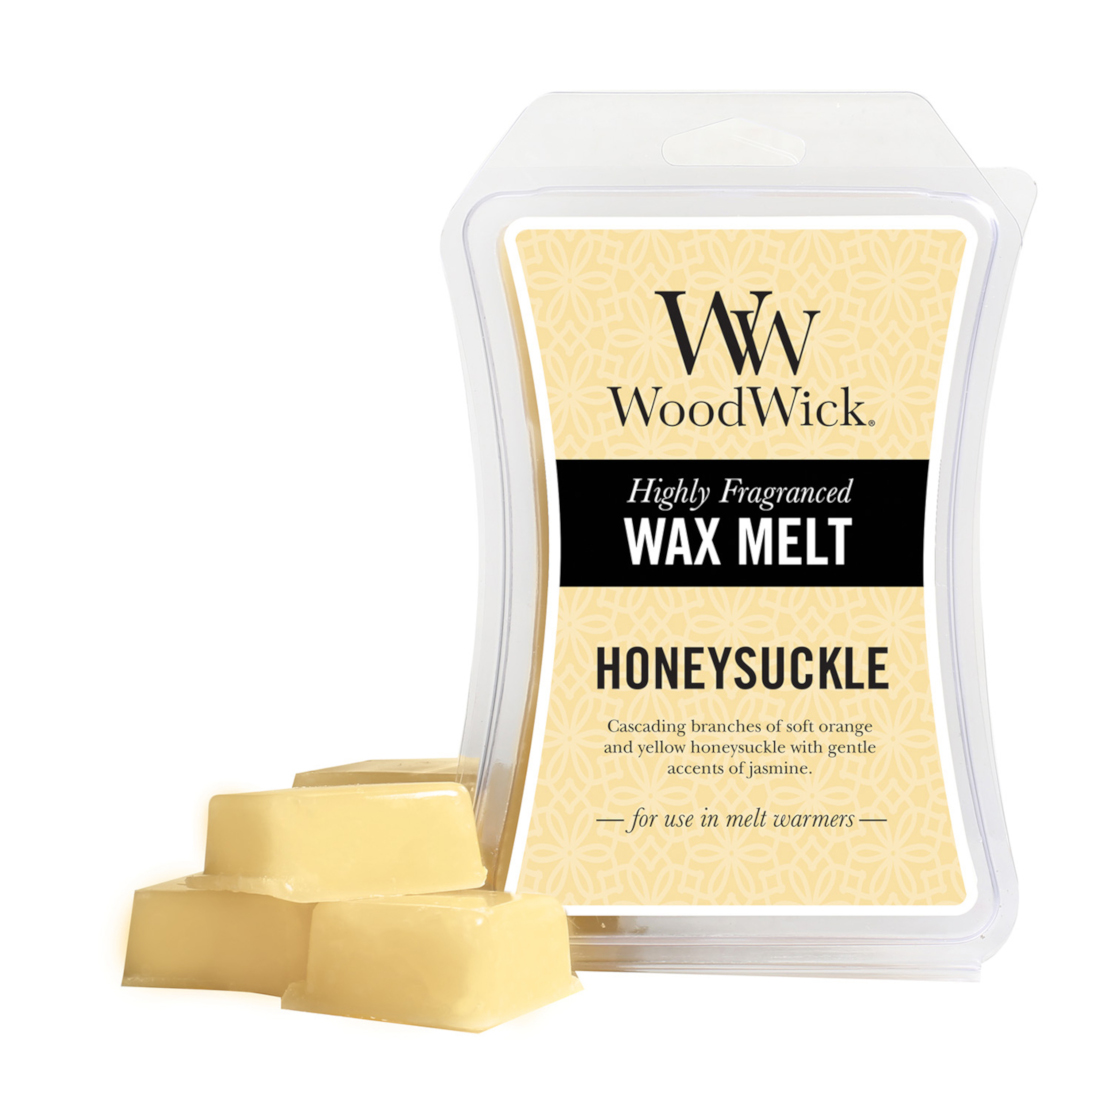 Woodwick Honeysuckle Wax Melt